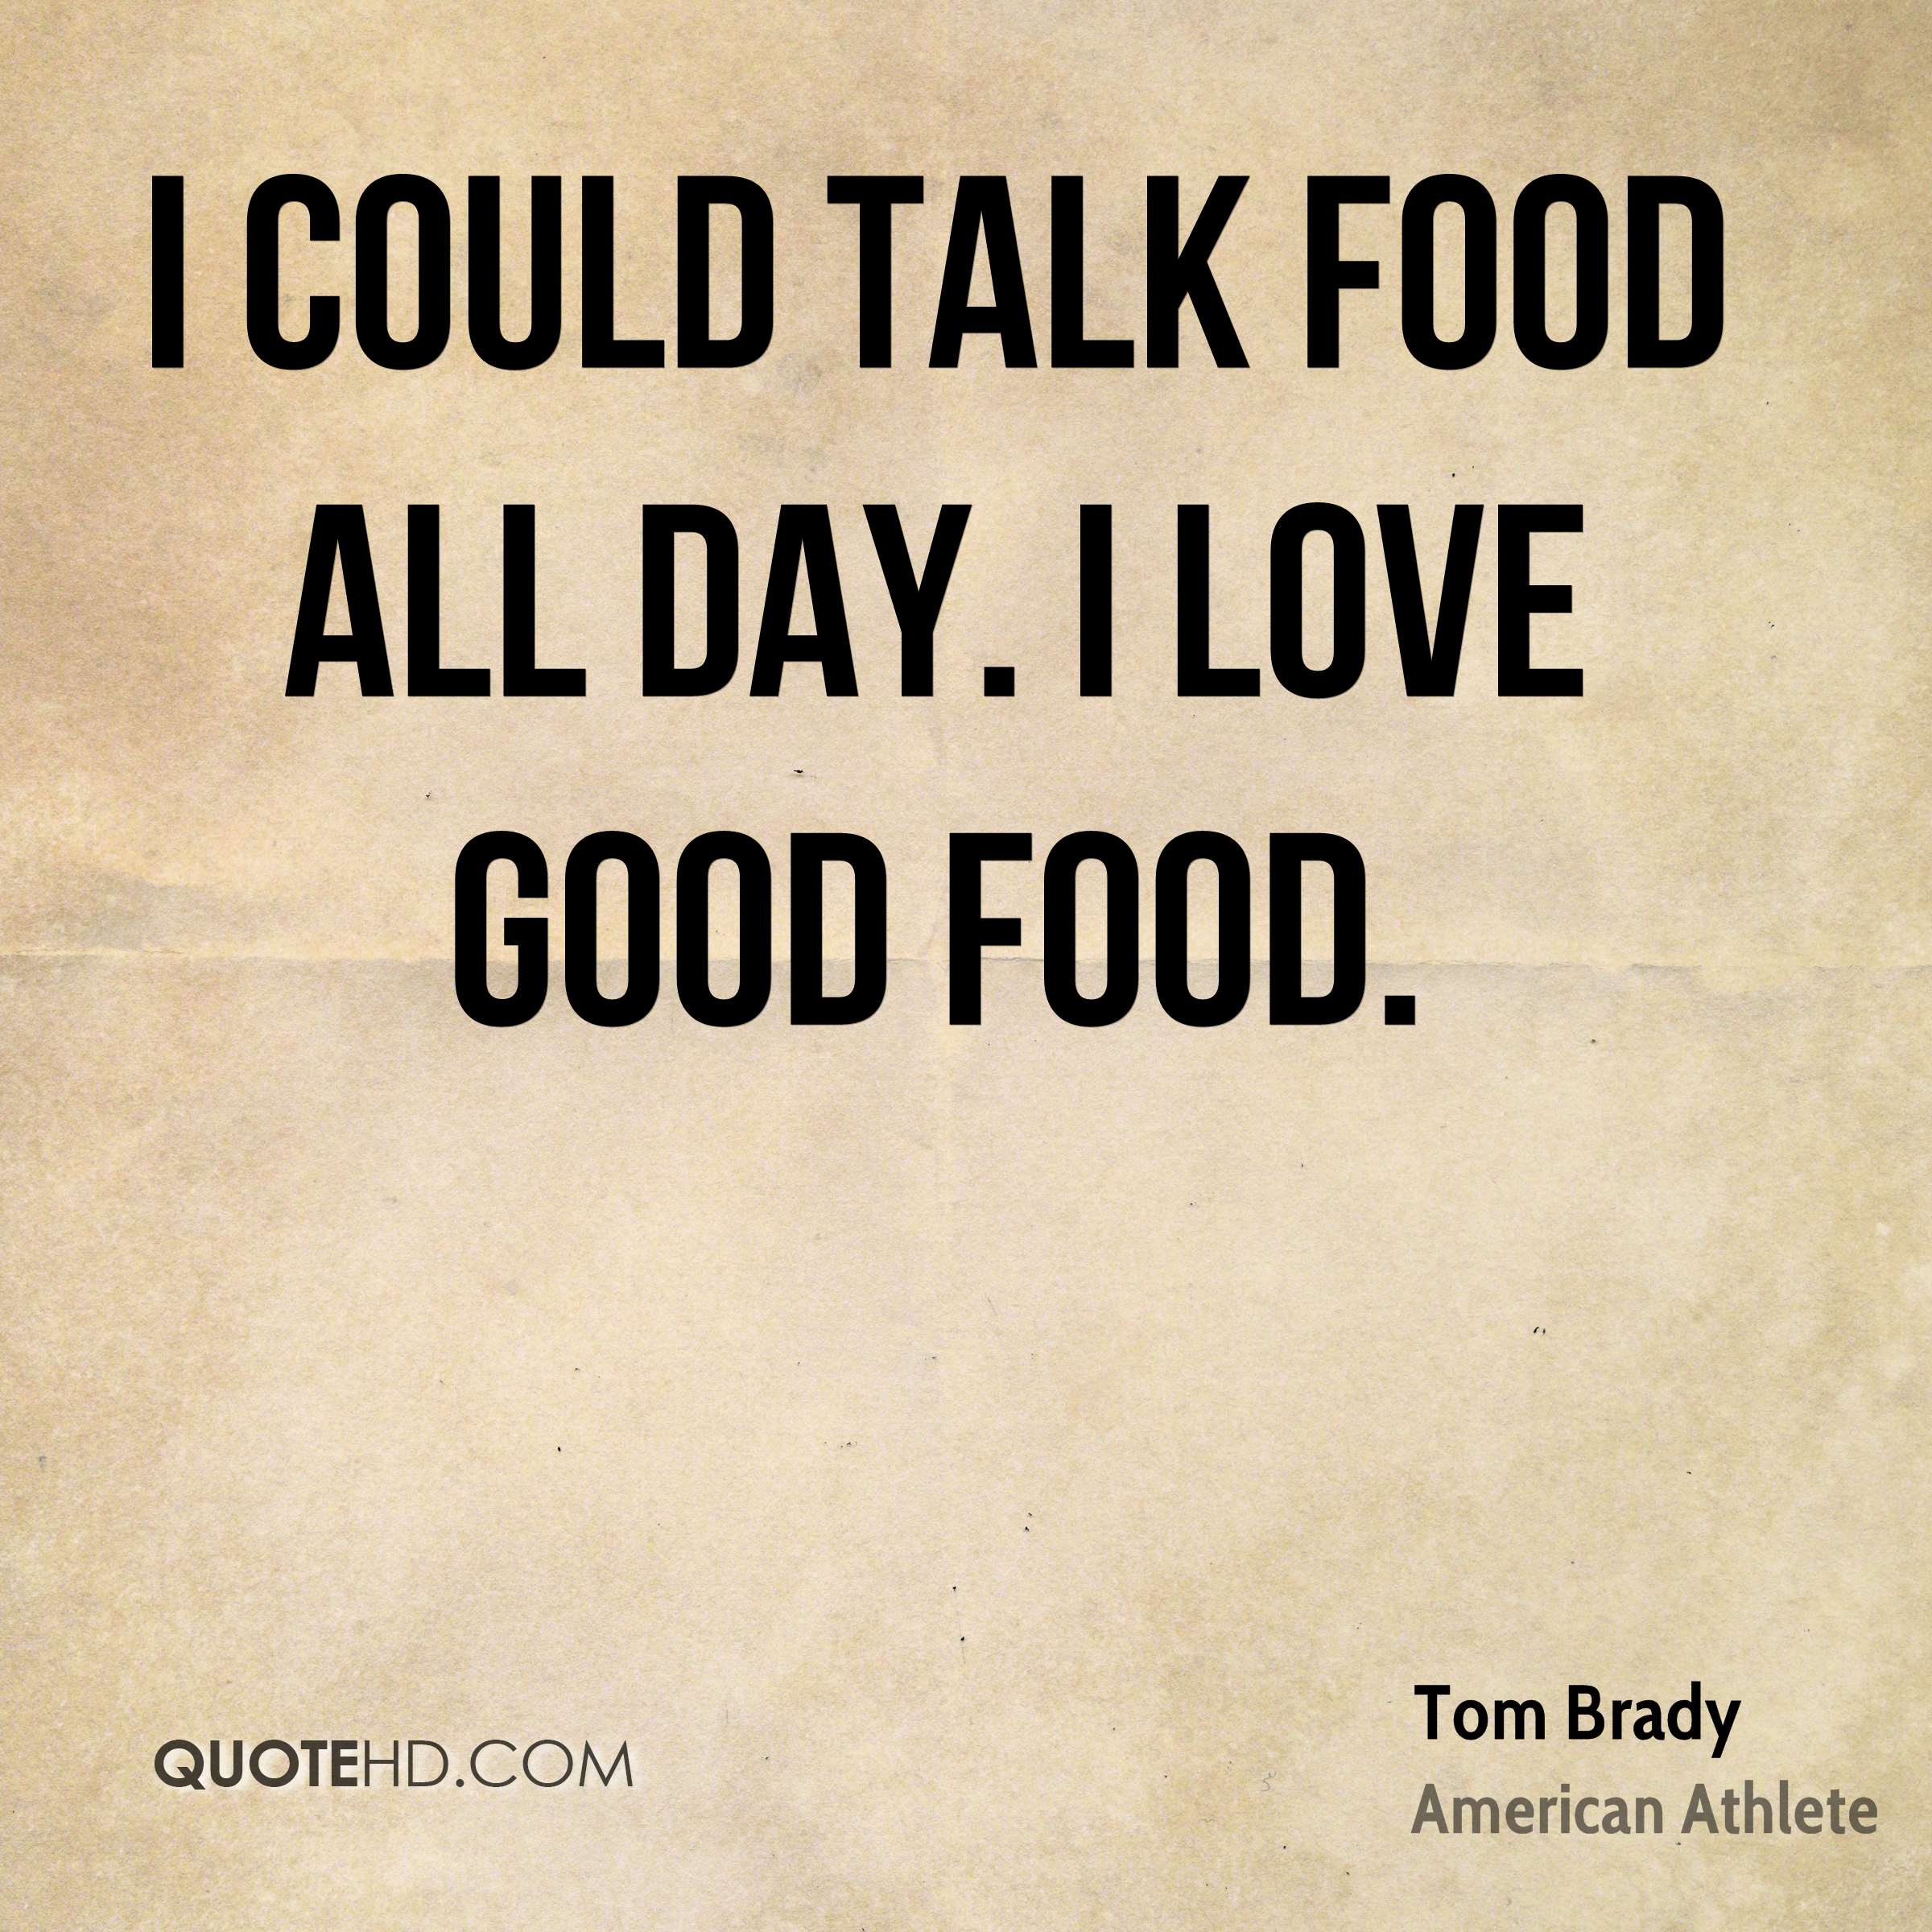 I could talk food all day. I love good food. Tom Brady